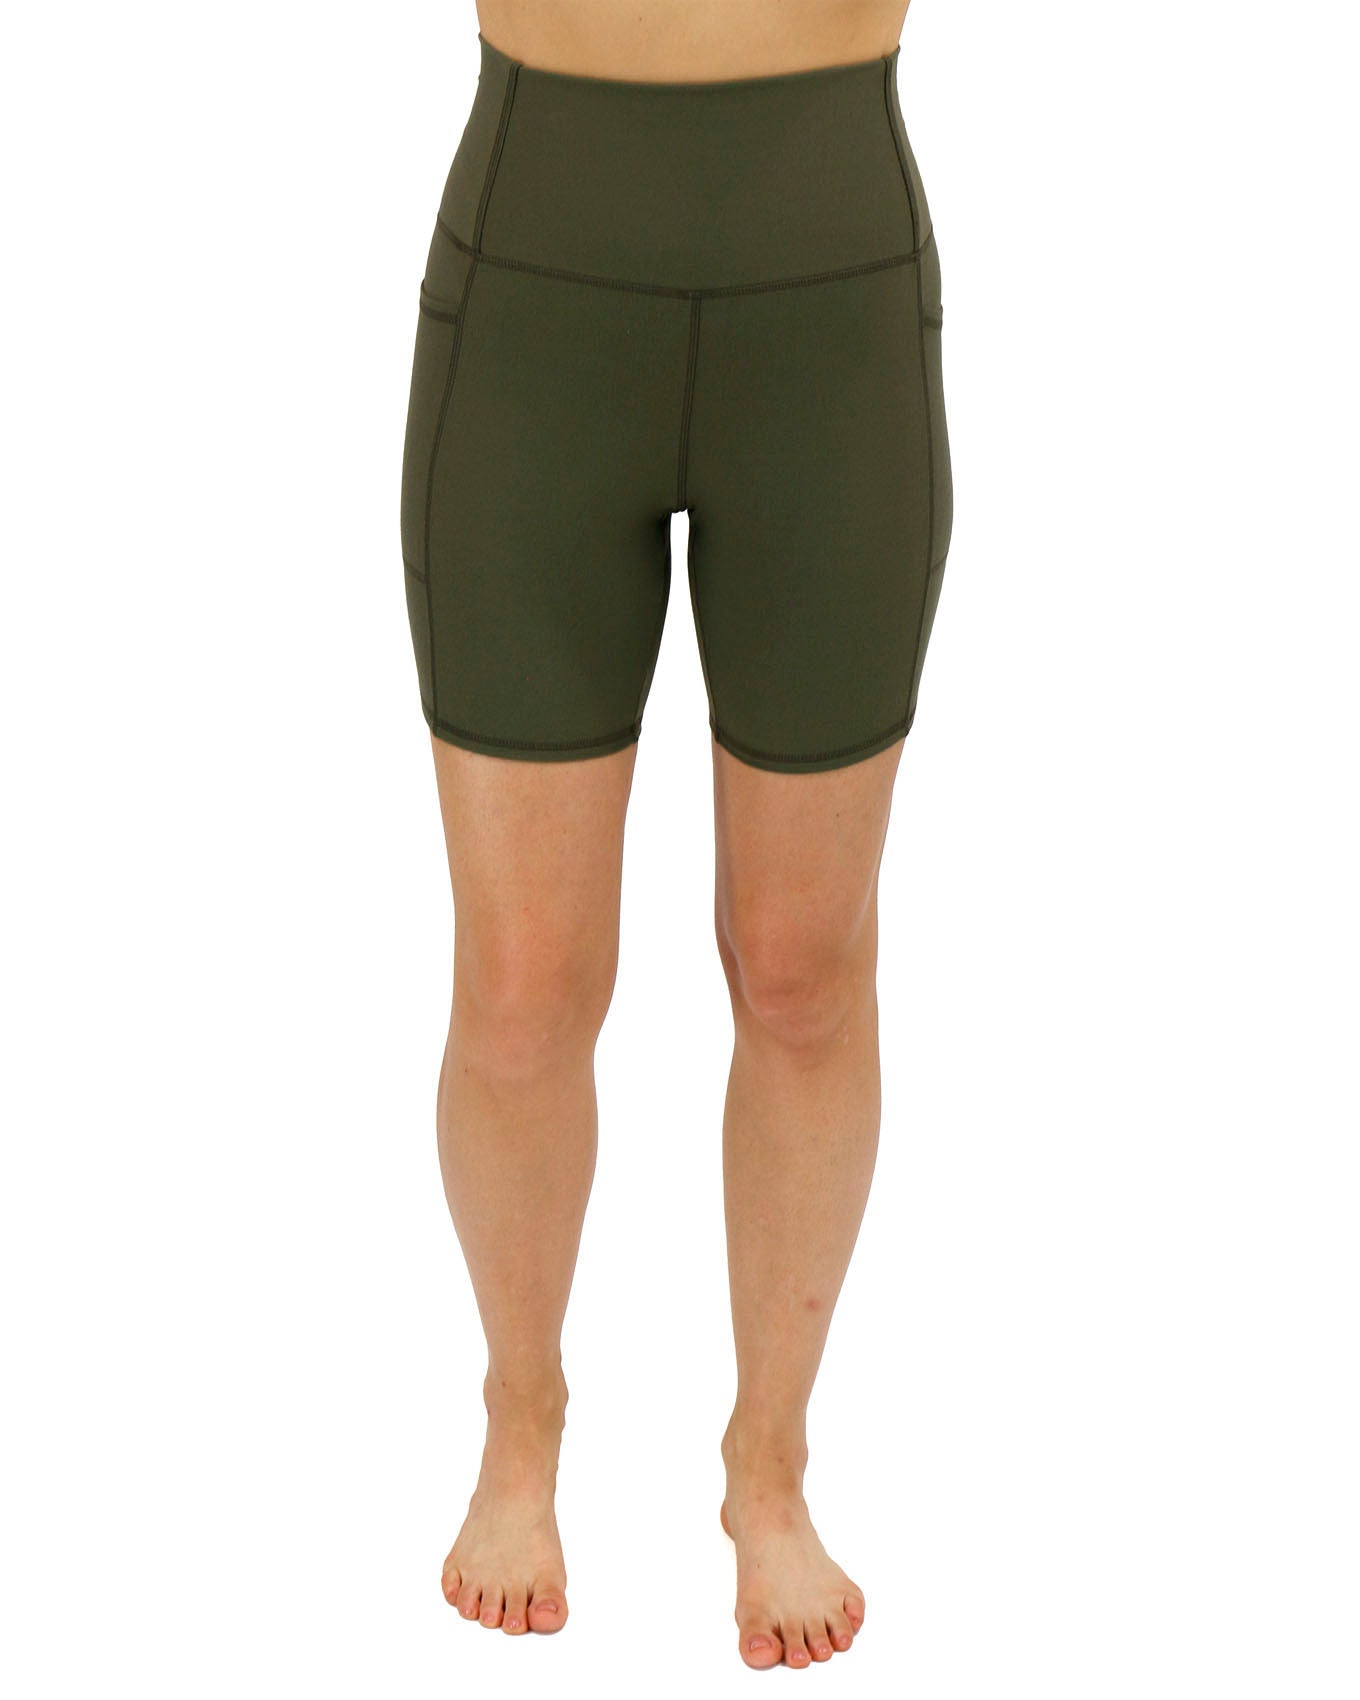 Front stock shot of Olive 7" Daily Pocket Biker Shorts